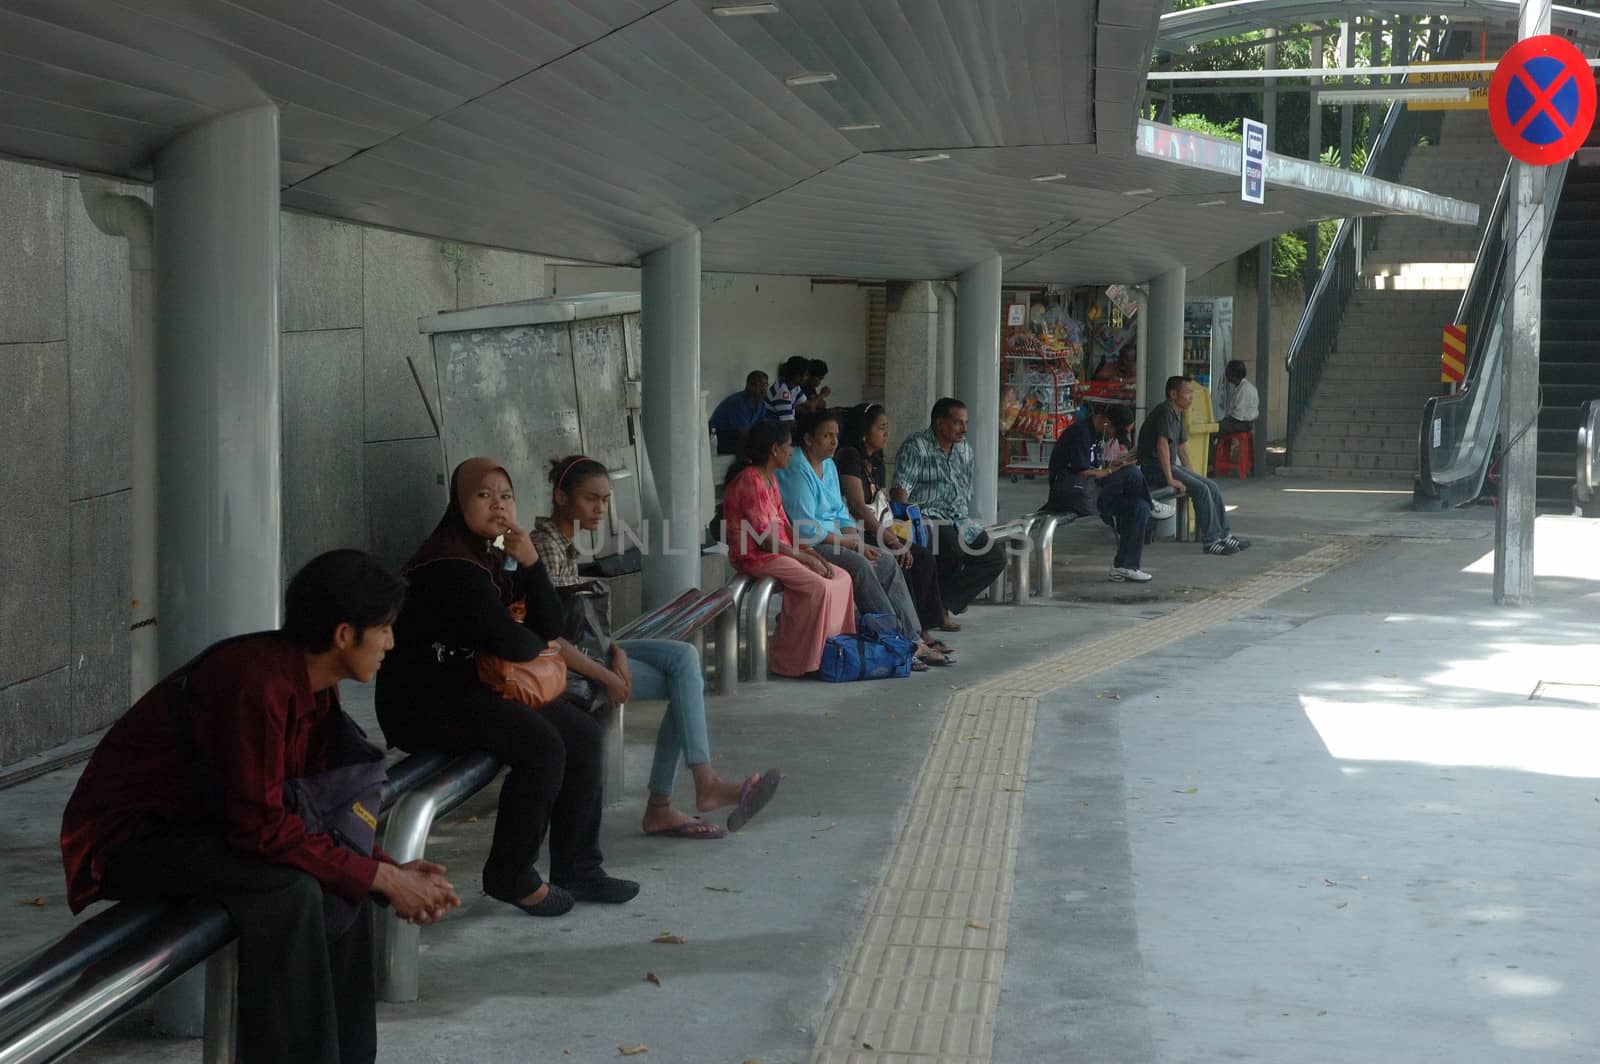 Kuala Lumpur, Malaysia - June 8, 2013: Malaysian people waiting for bus in shelter.